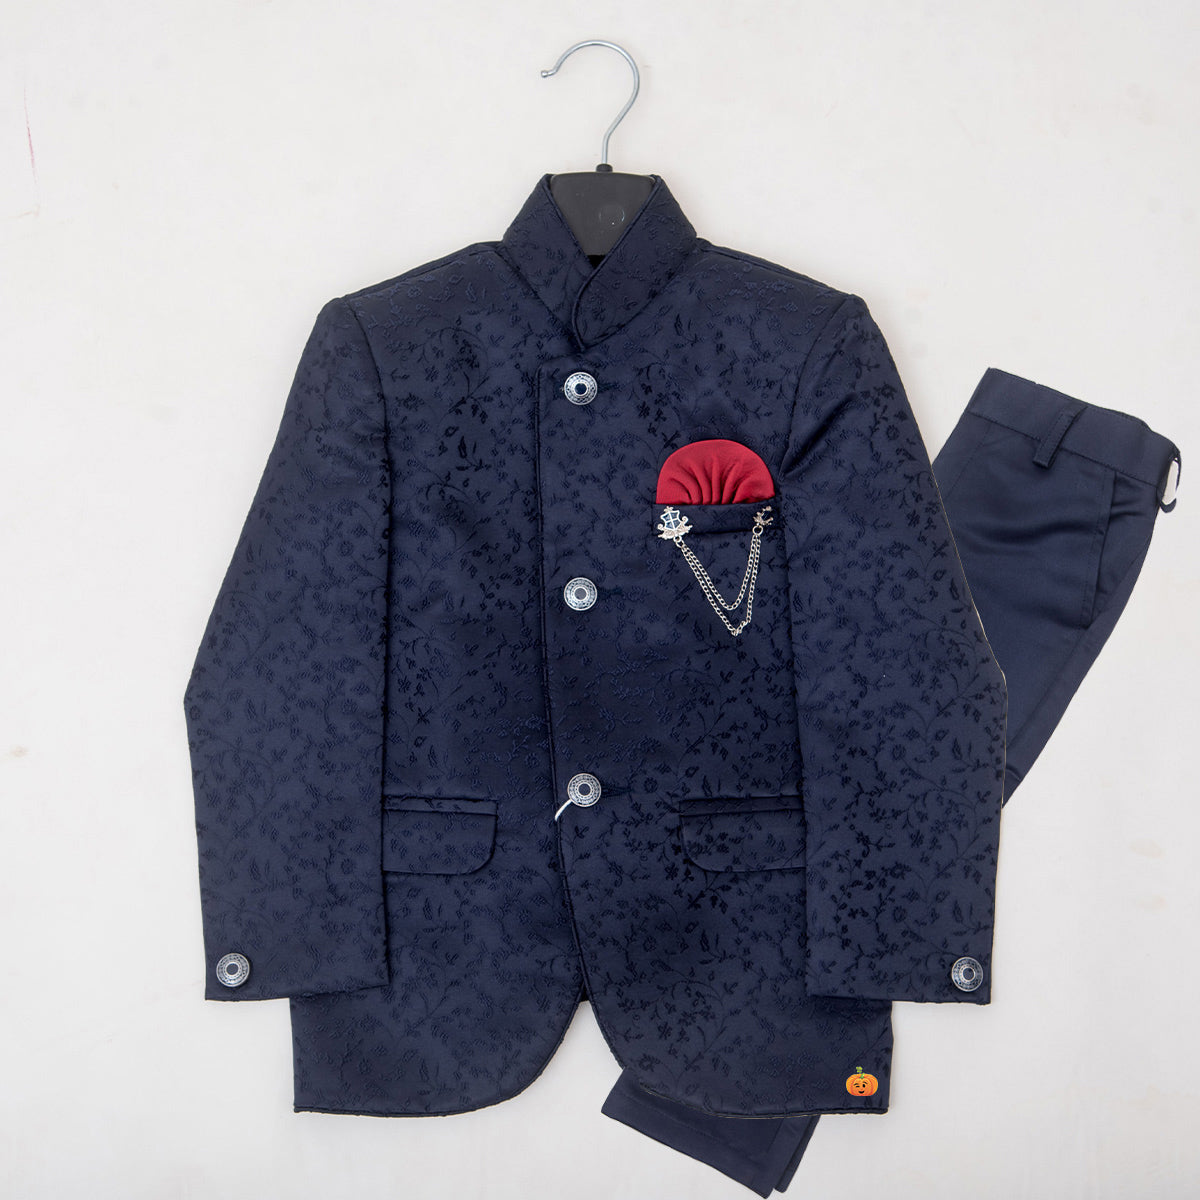 Bandhgala for Men - Buy Jodhpuri Jacket for Mens Online | Rathore.com –  Page 2